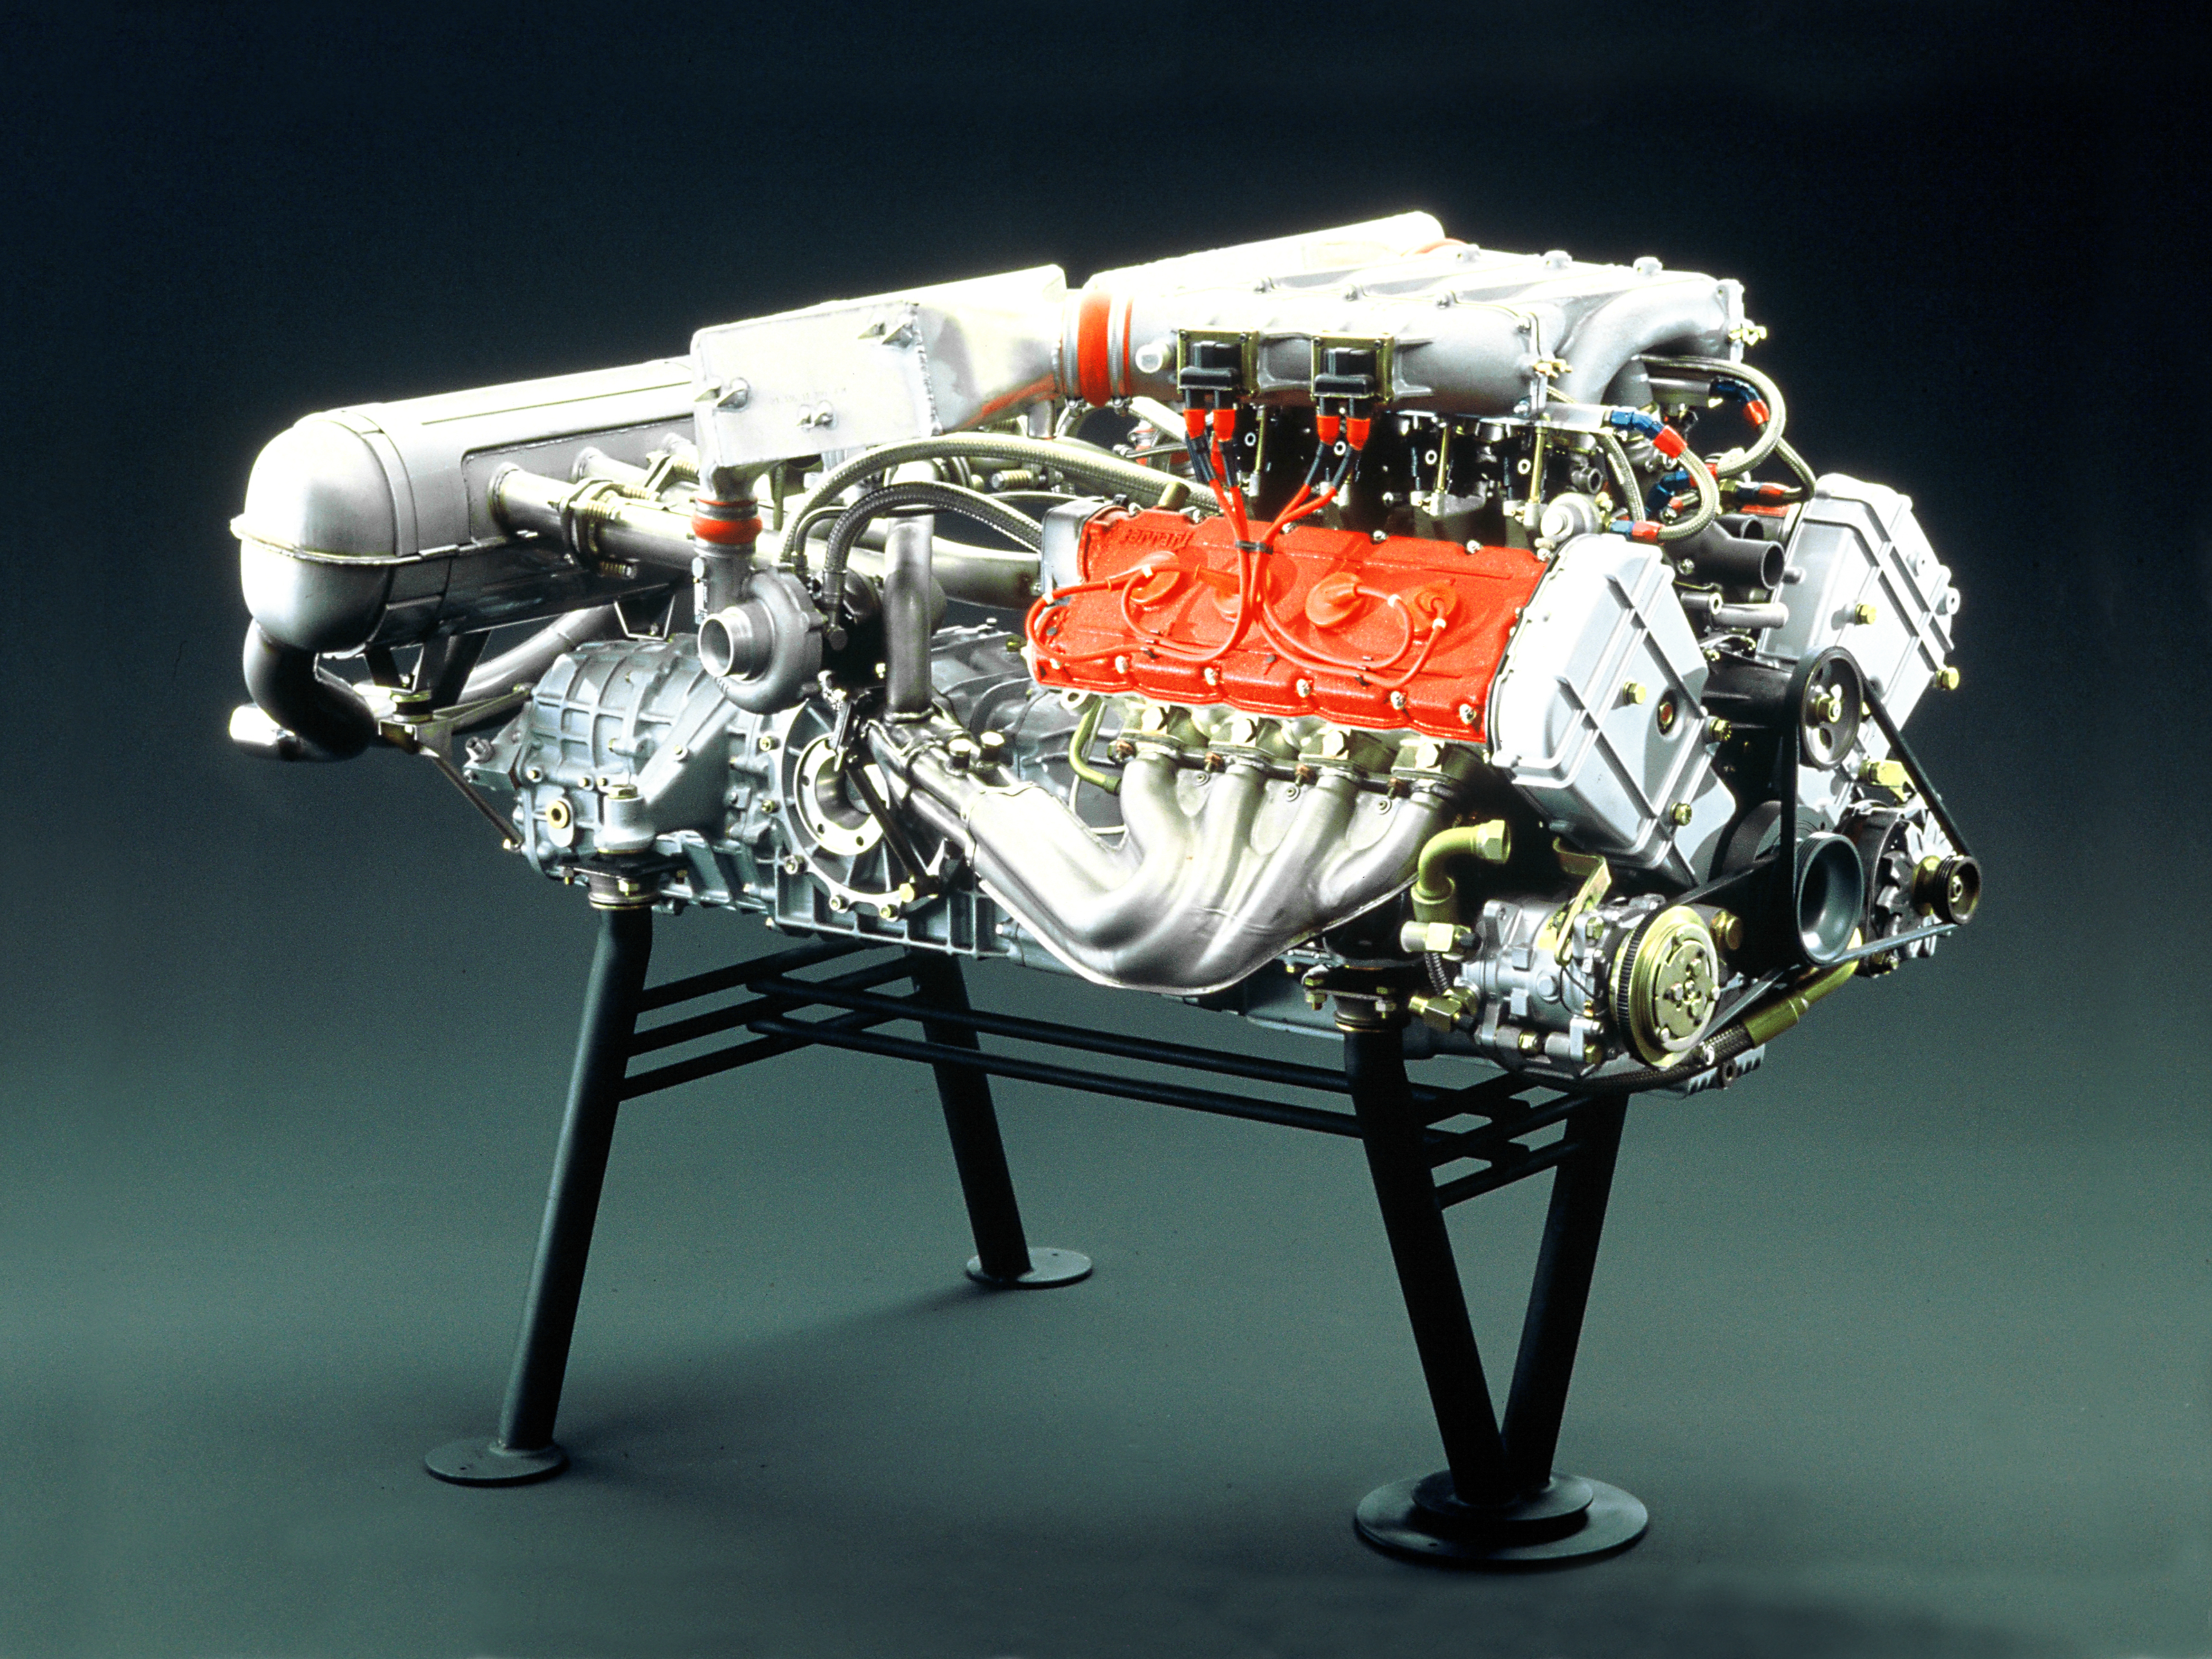 Джулиан какой двигатель. Феррари f40 мотор. Феррари ф40 двигатель. Ferrari f40 двигатель. Двигатель Феррари v8.